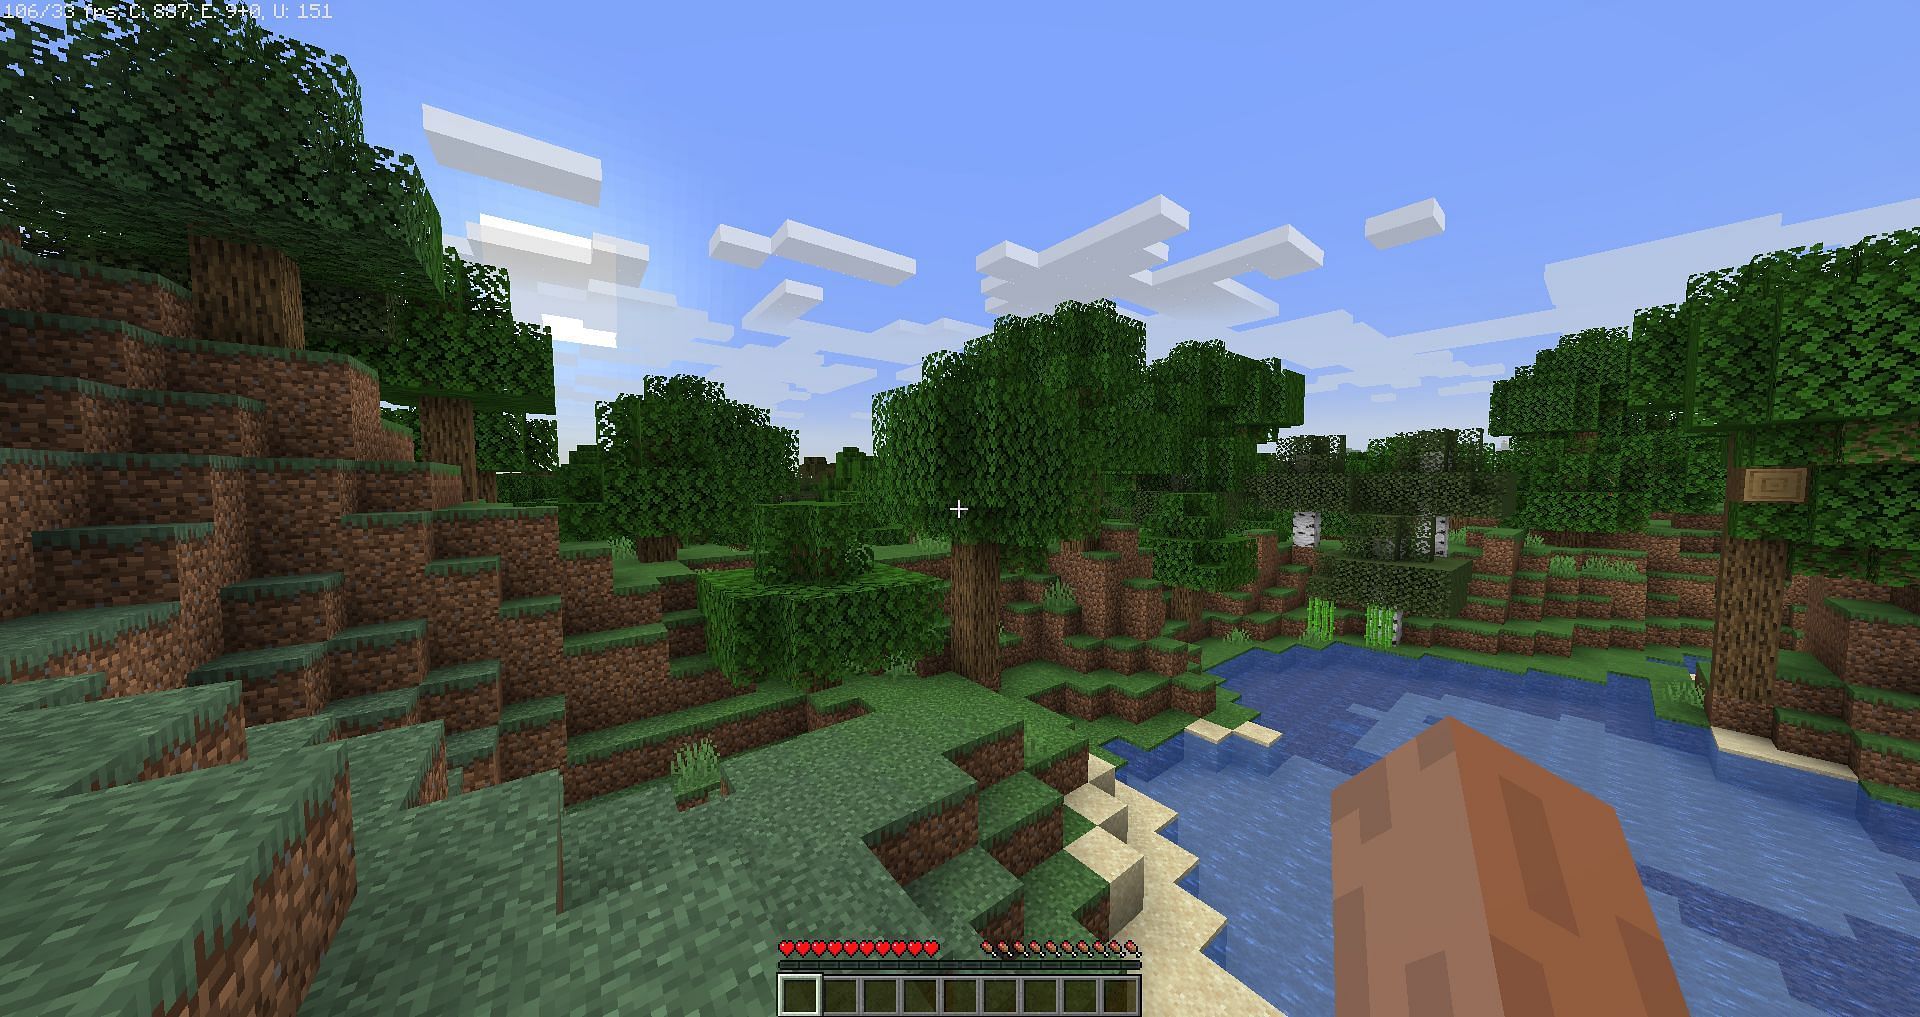 Plains offer abundant resources in Minecraft (Image via Mojang)